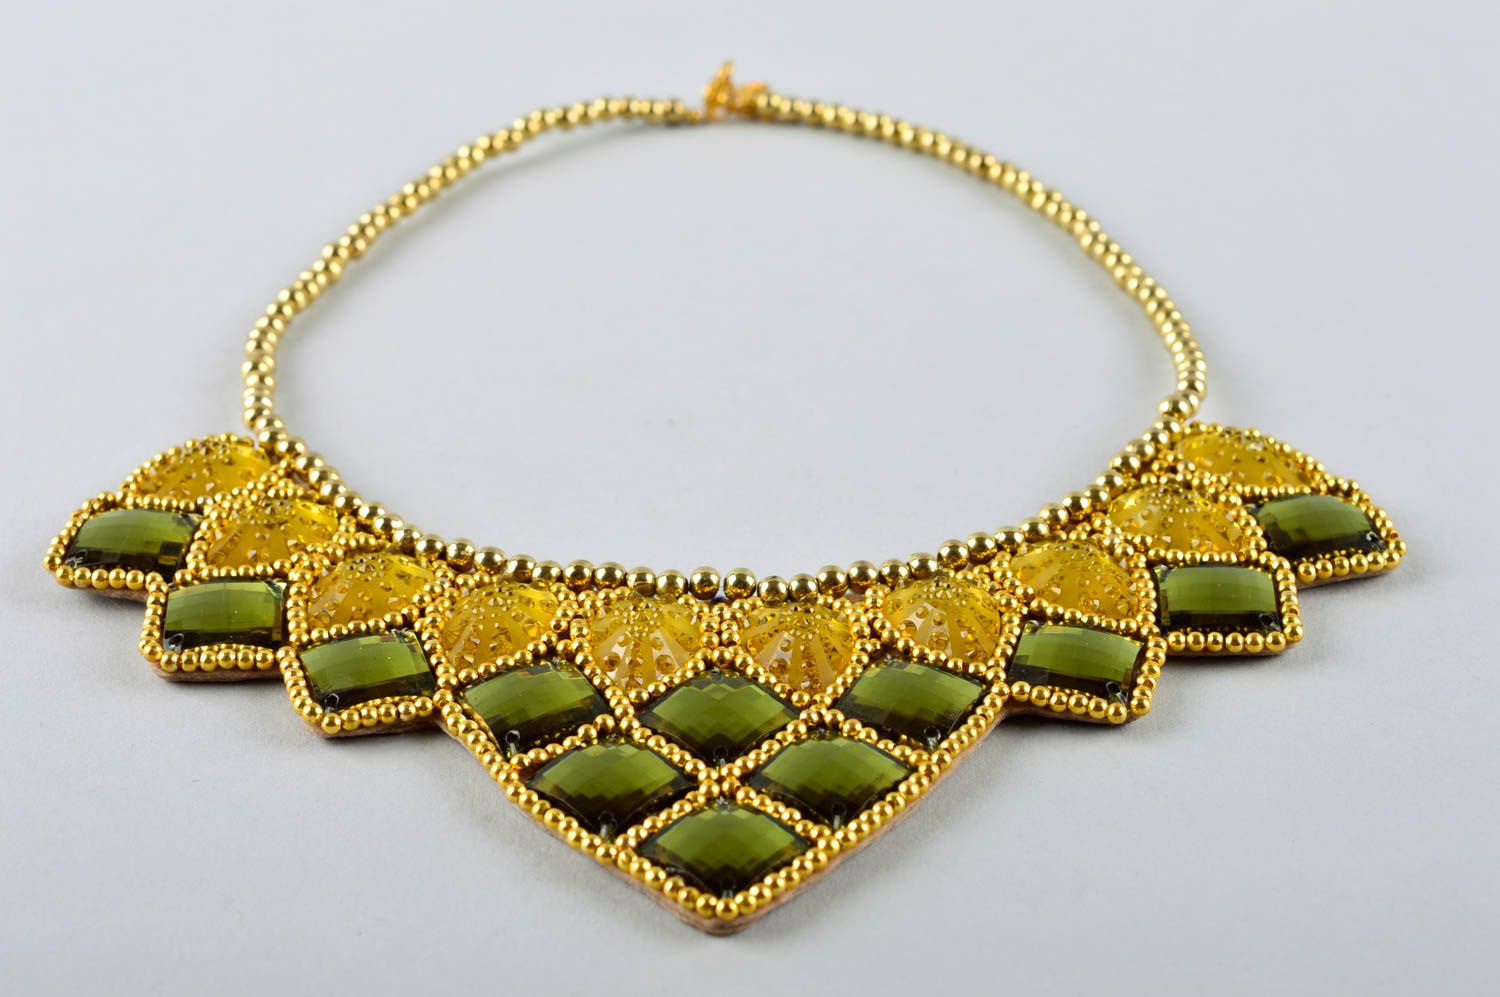 Handmade necklace designer accessory gift ideas elite jewelry bead necklace photo 3